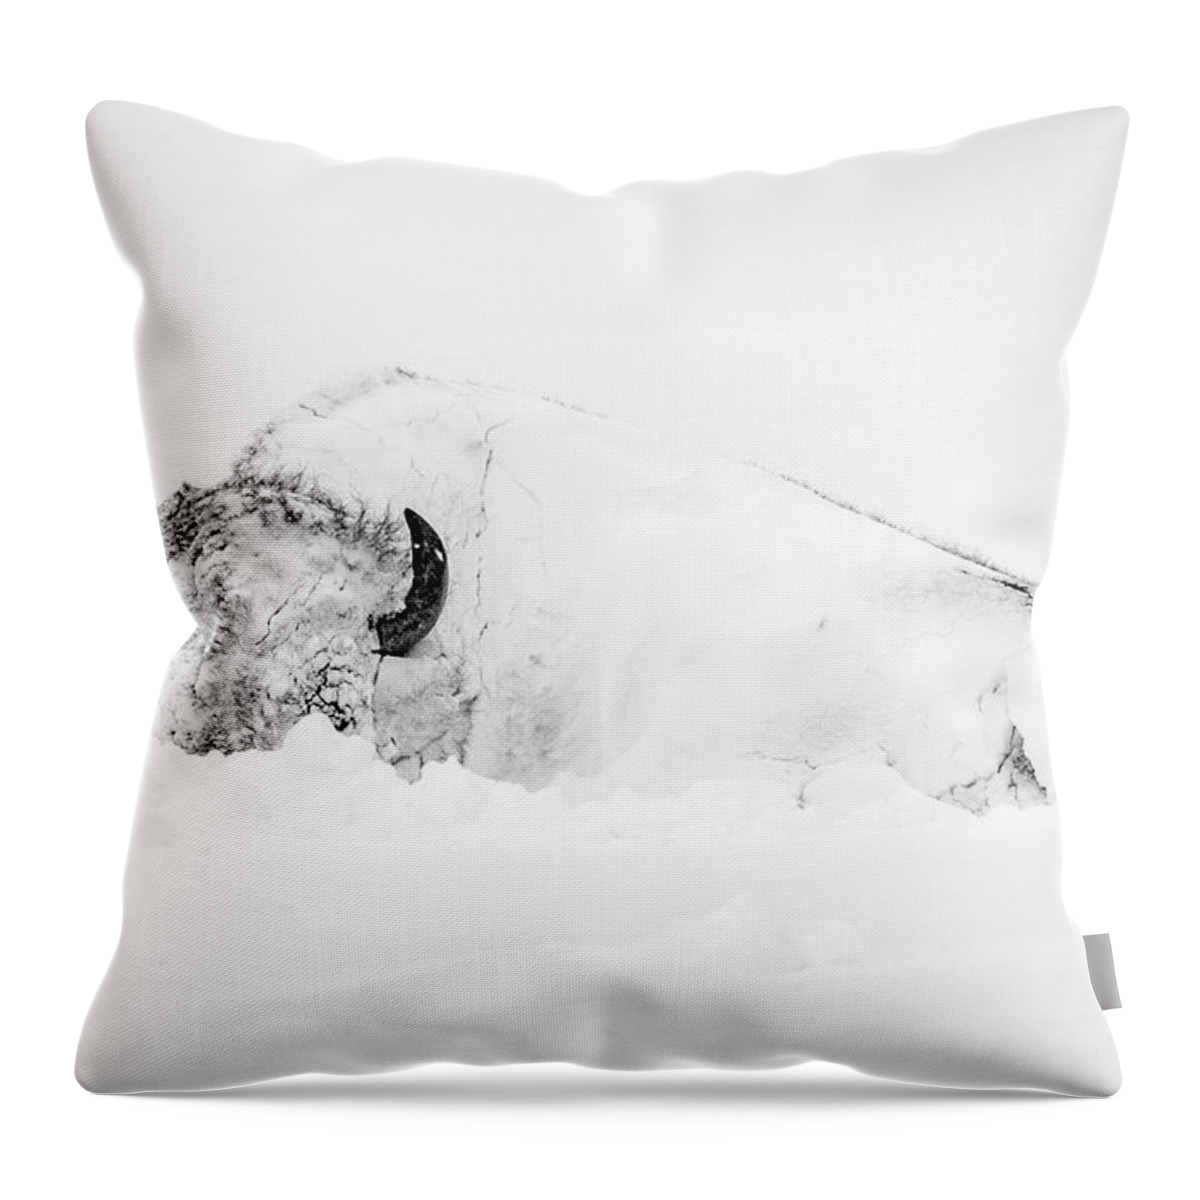 Snow Throw Pillow featuring the photograph Snowy Buffalo by D Robert Franz